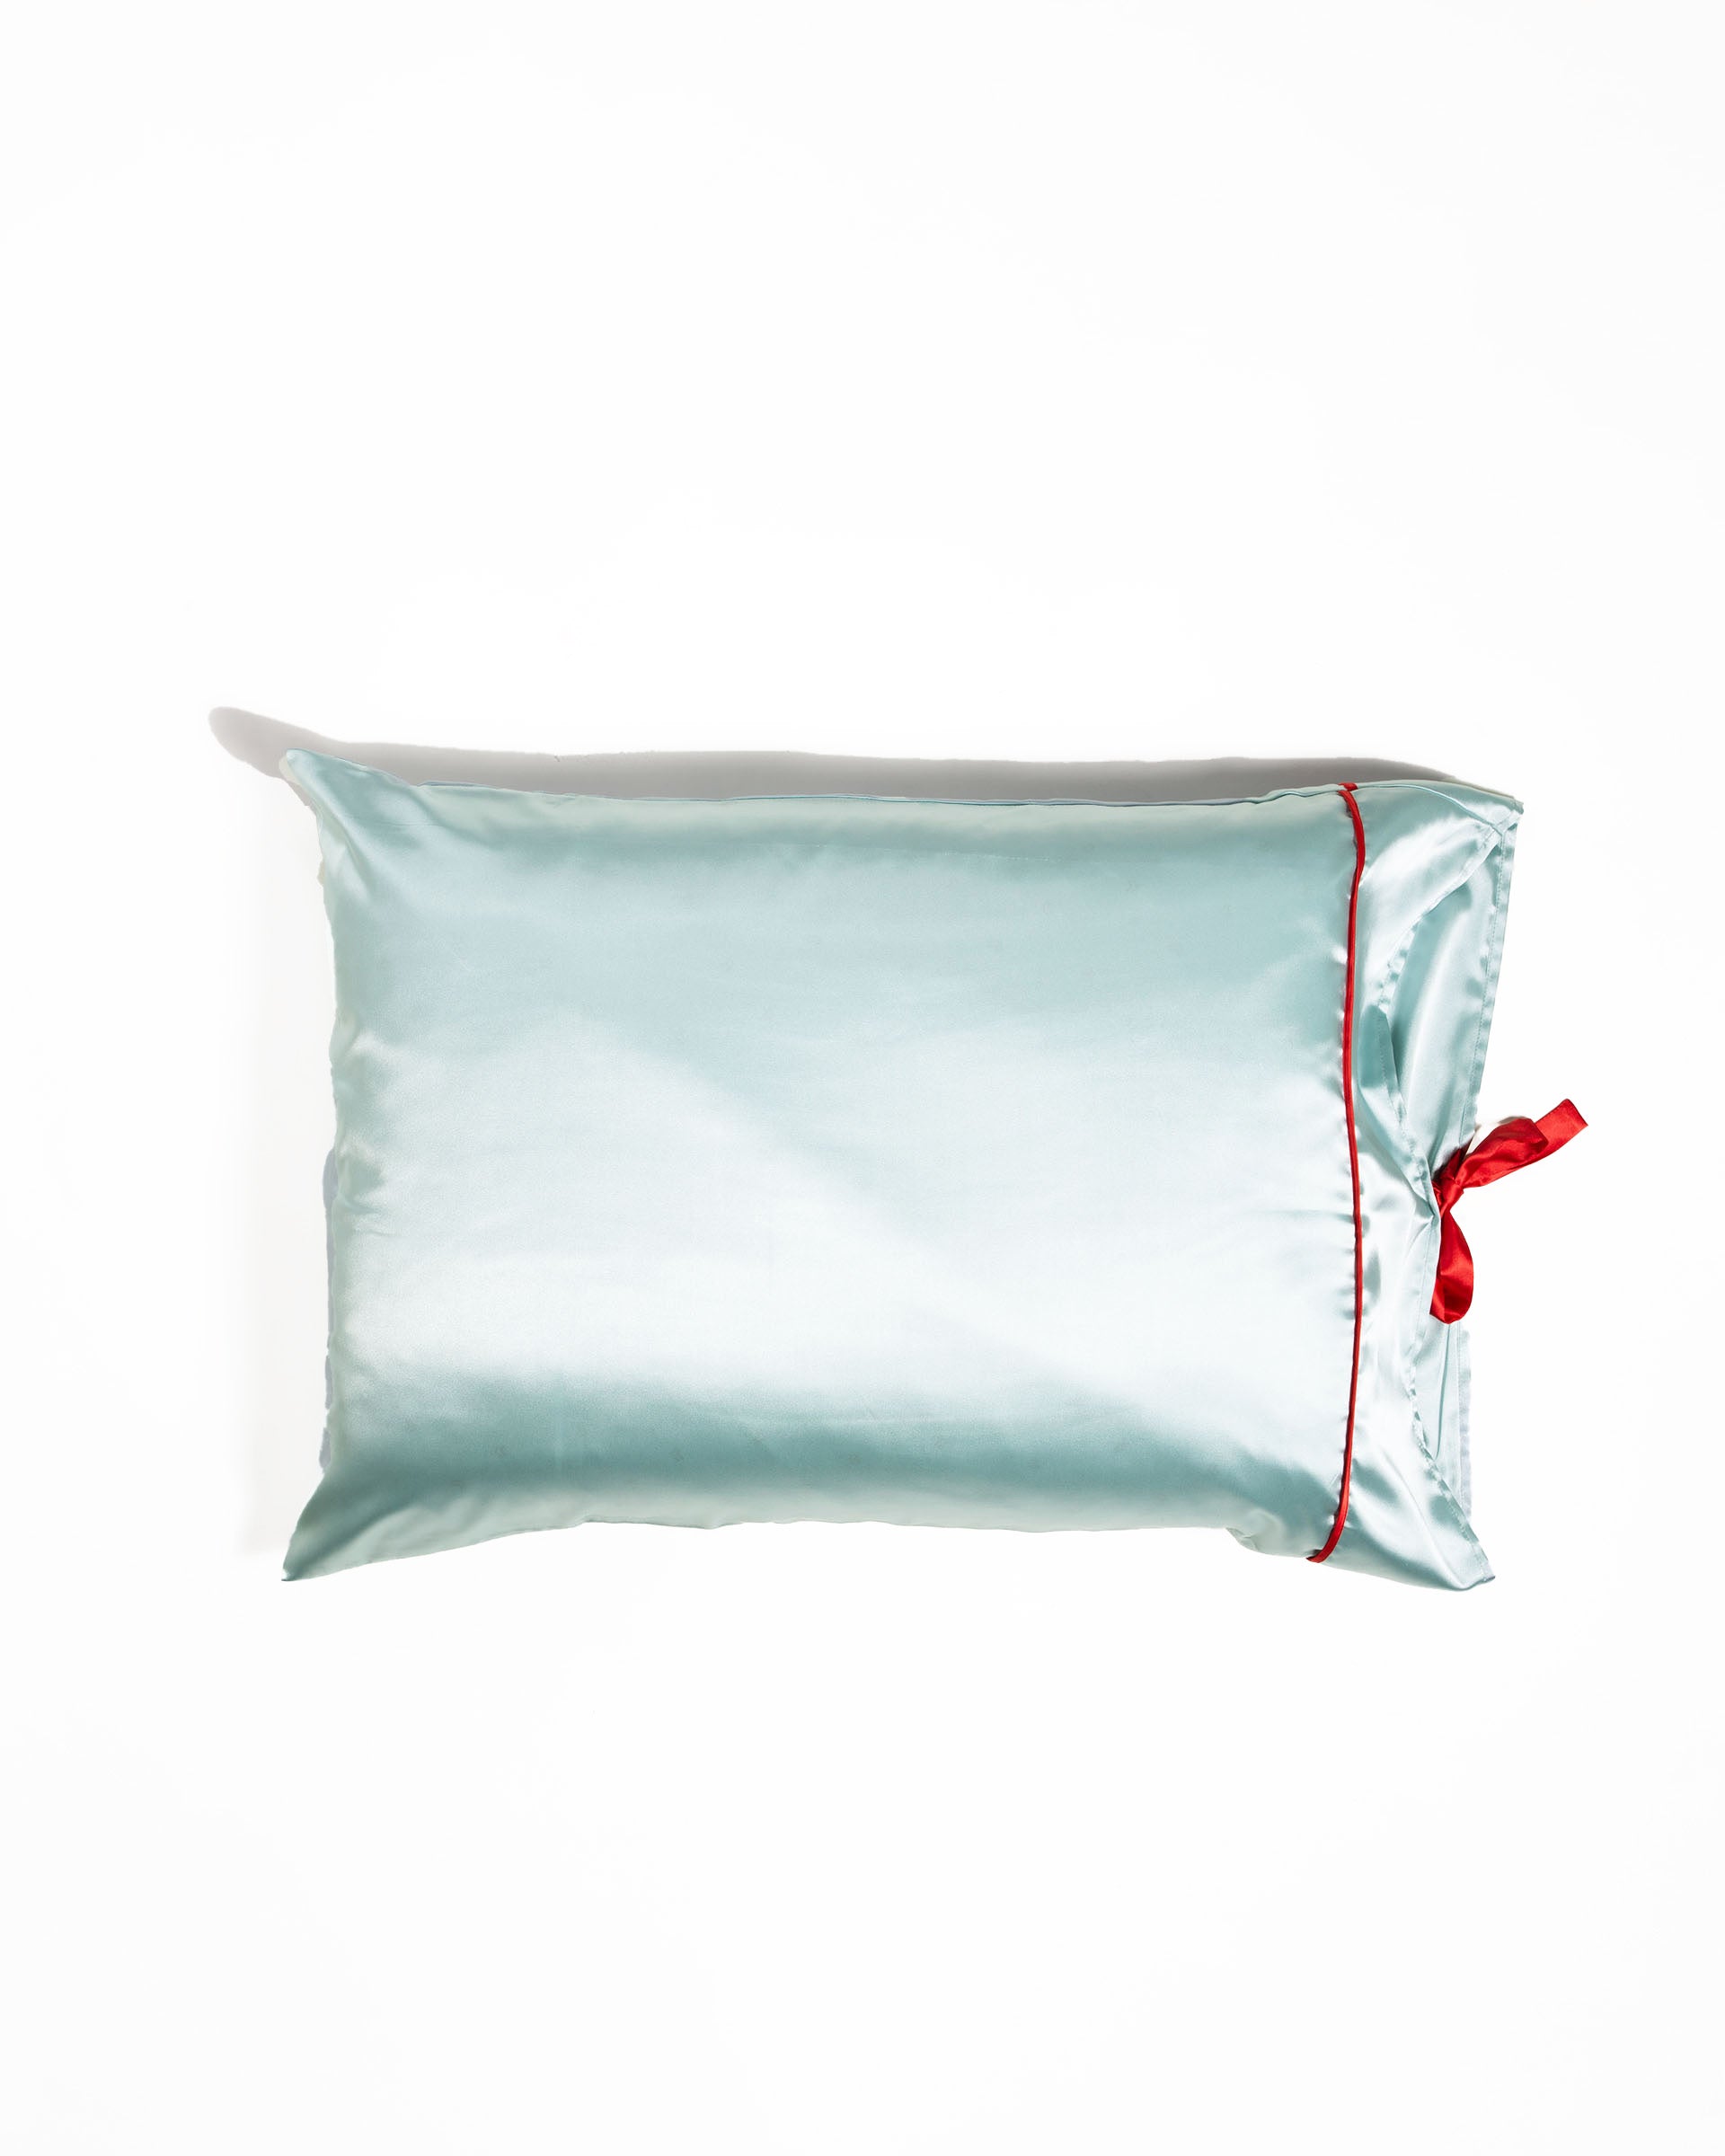 Mersea aquamarine satin sailor pillowcase against white background